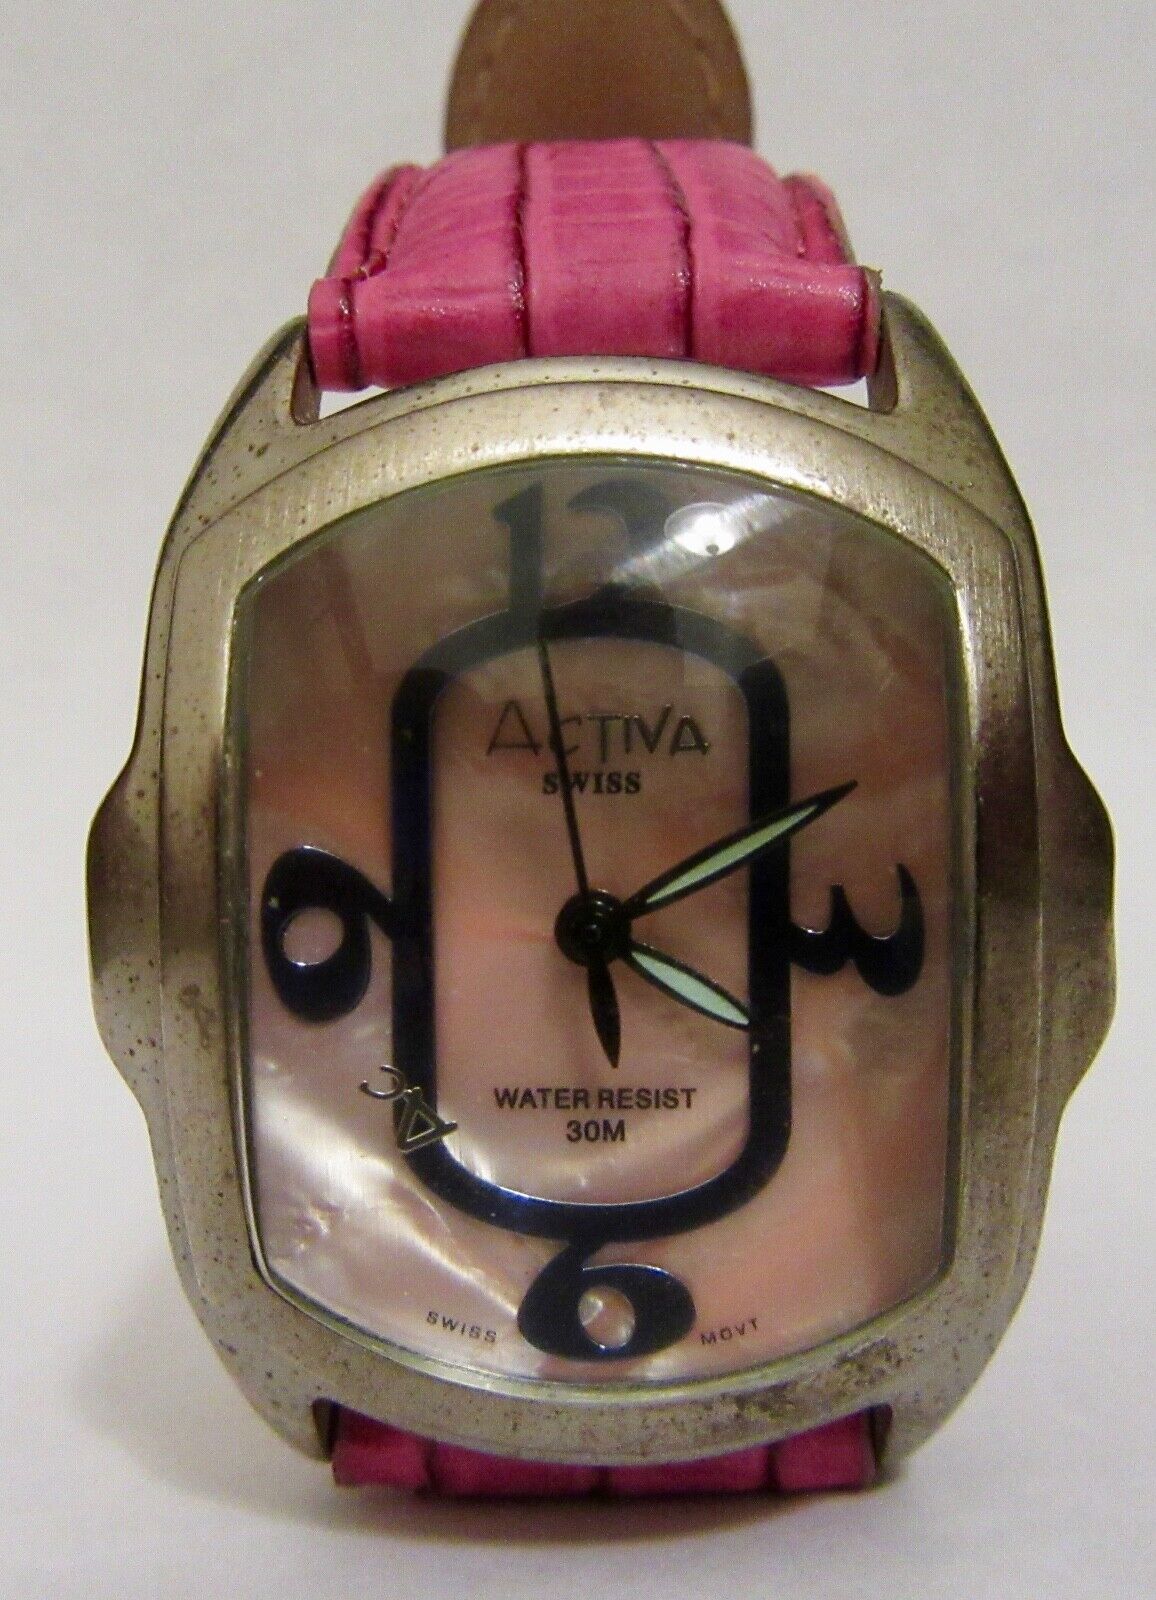 Activa Swiss Ladies Water Resistant  Wristwatch # 495454 For Parts or Repair 